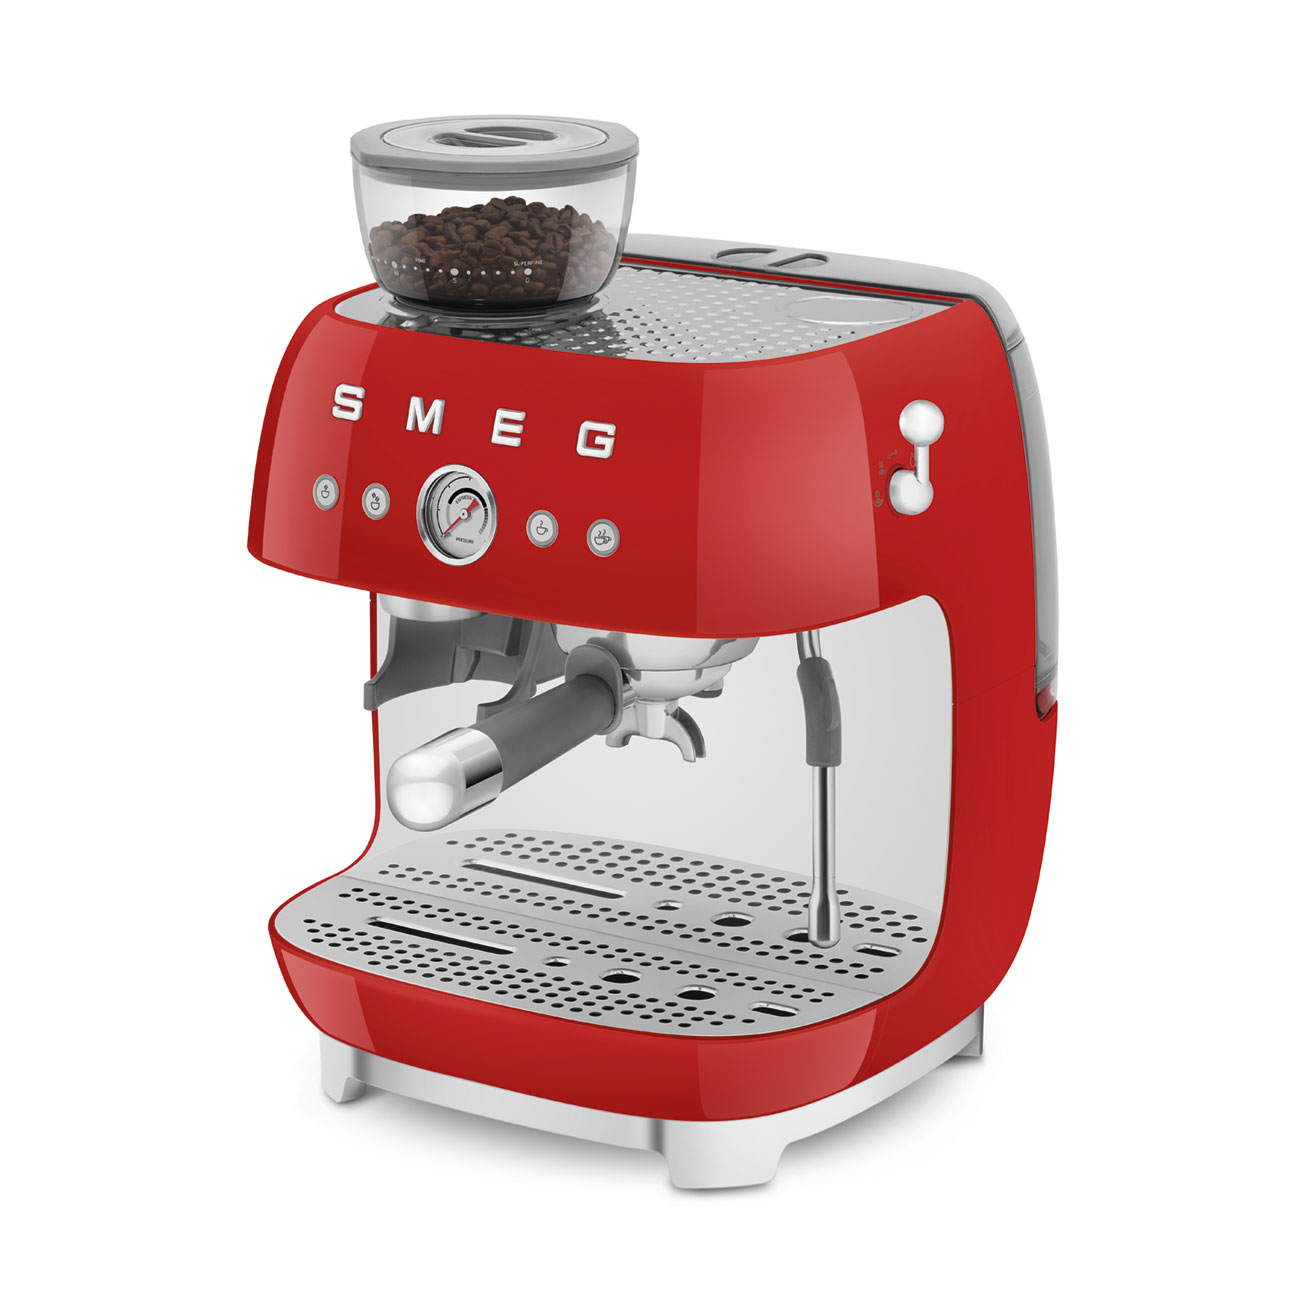 Smeg Red Espresso Manual Coffee Machine with Grinder_9